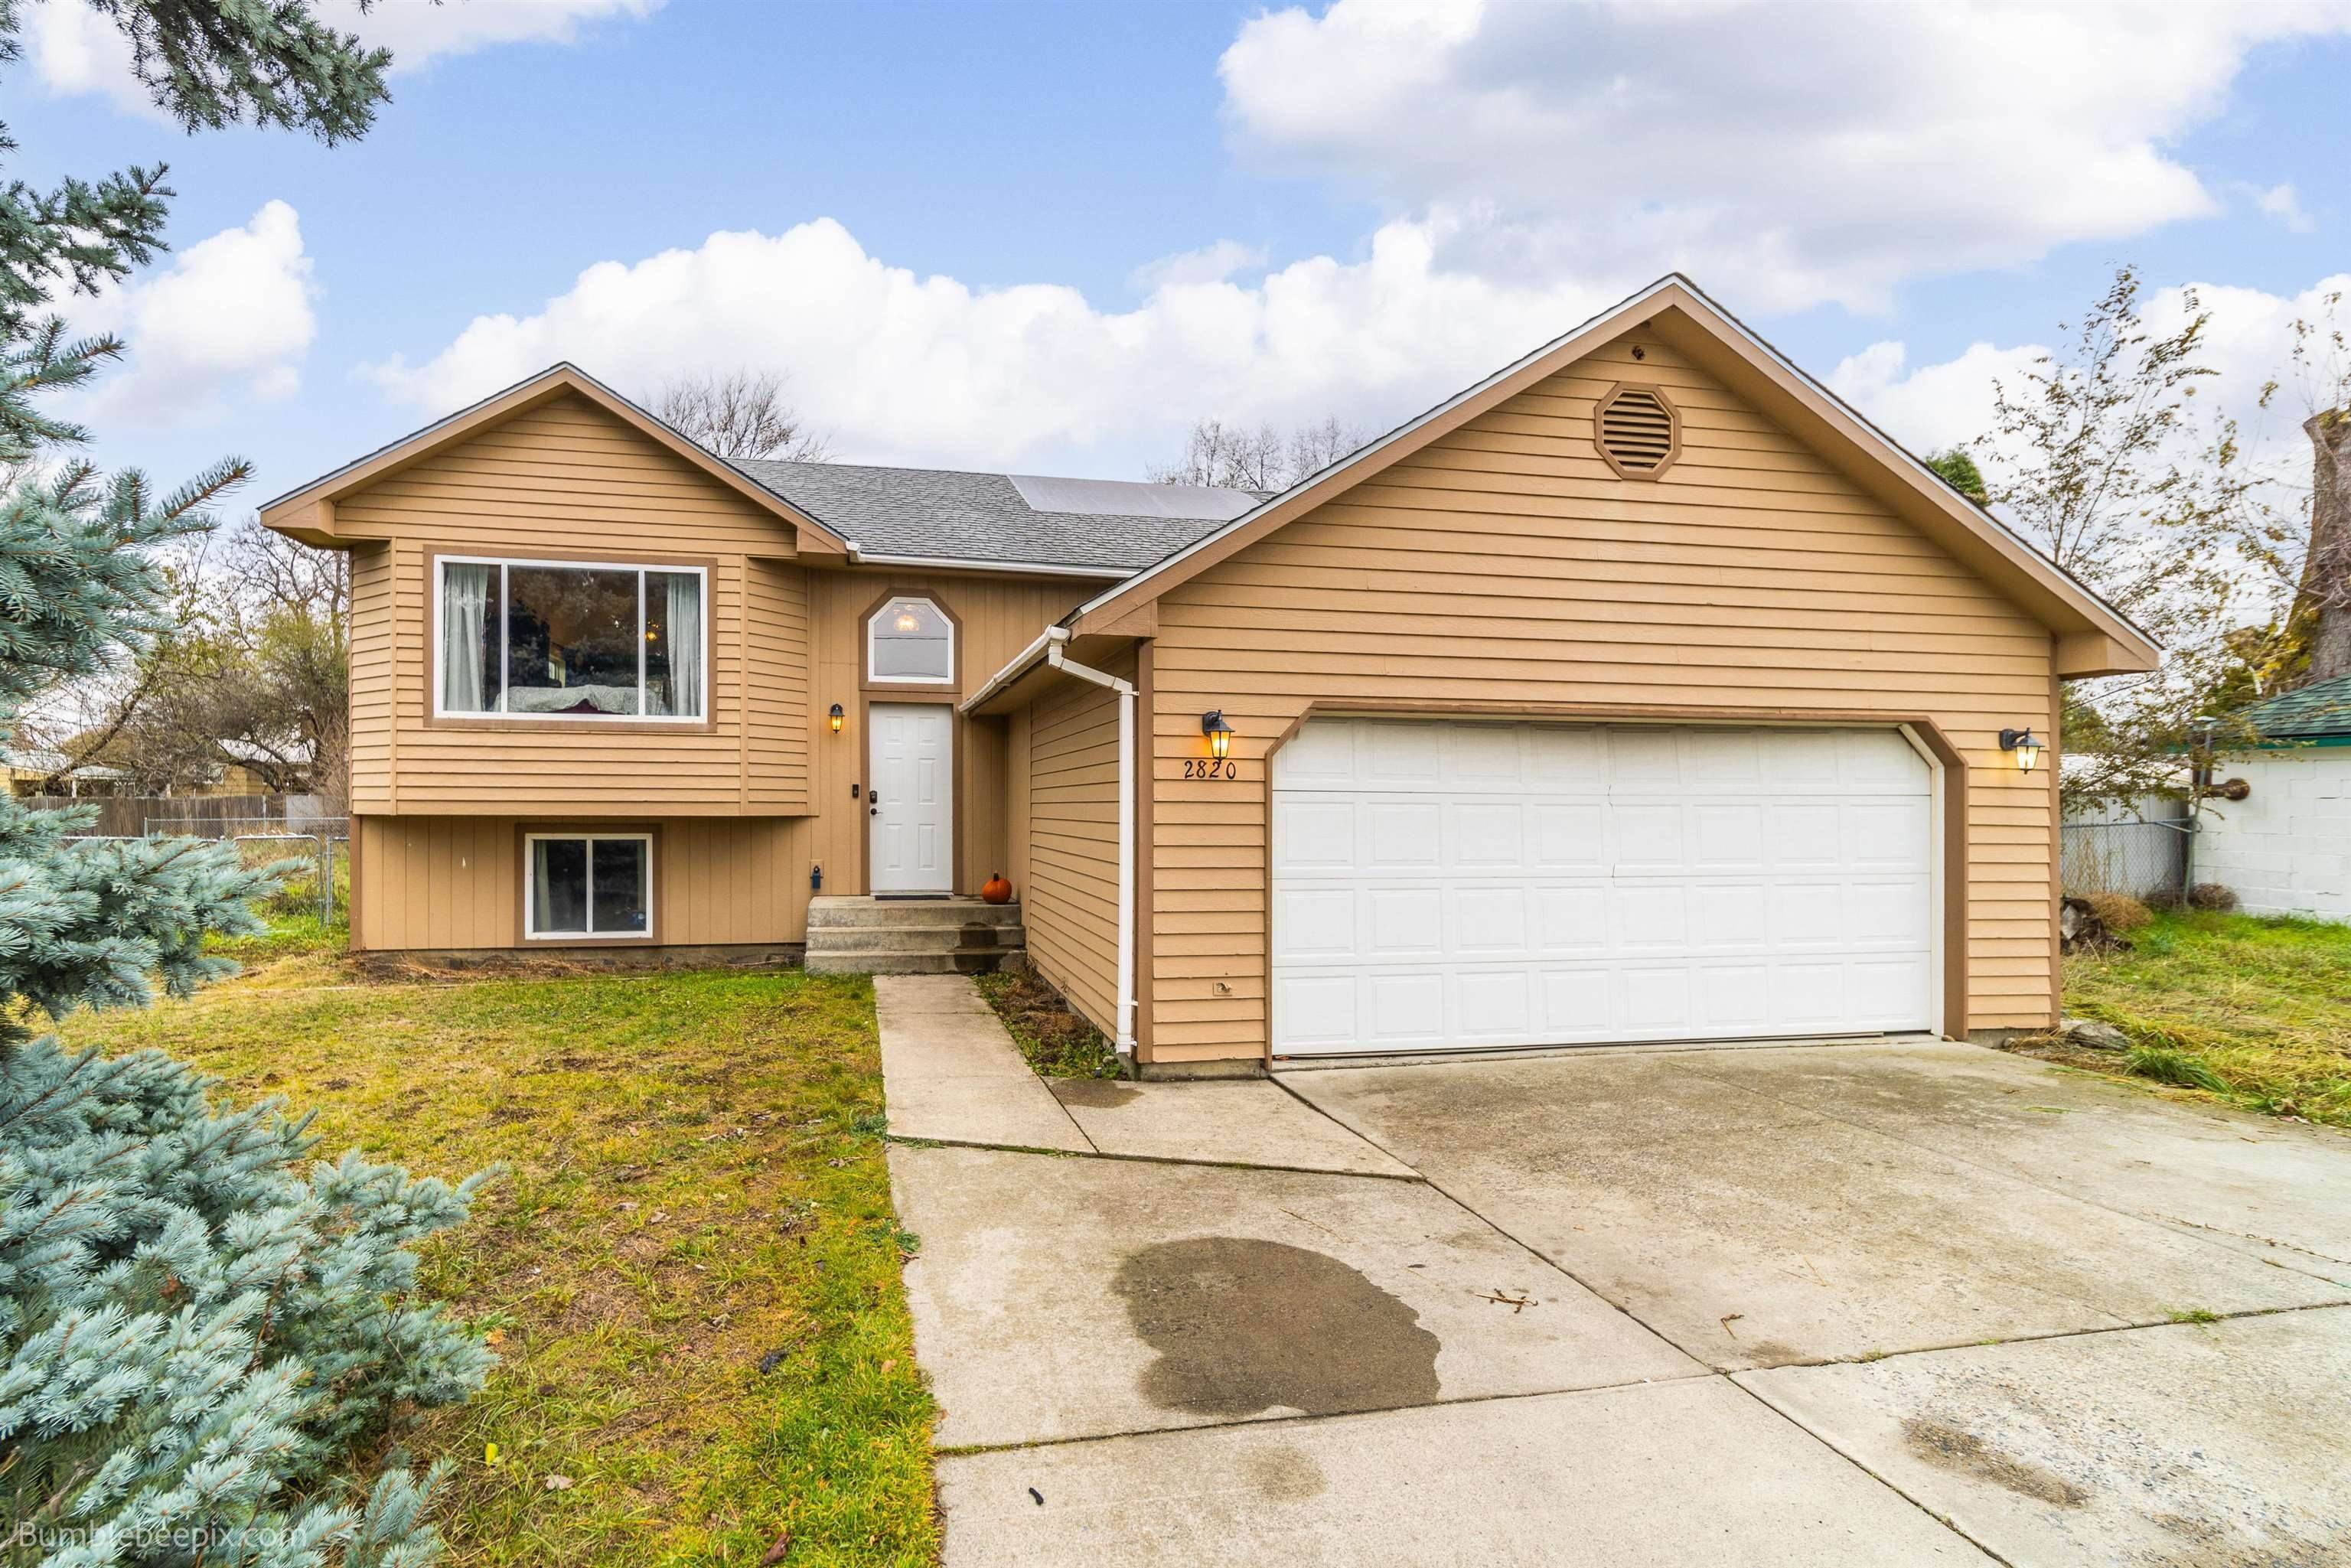 2. Single Family Homes for Sale at 2820 N Dora Road Spokane Valley, Washington 99212 United States